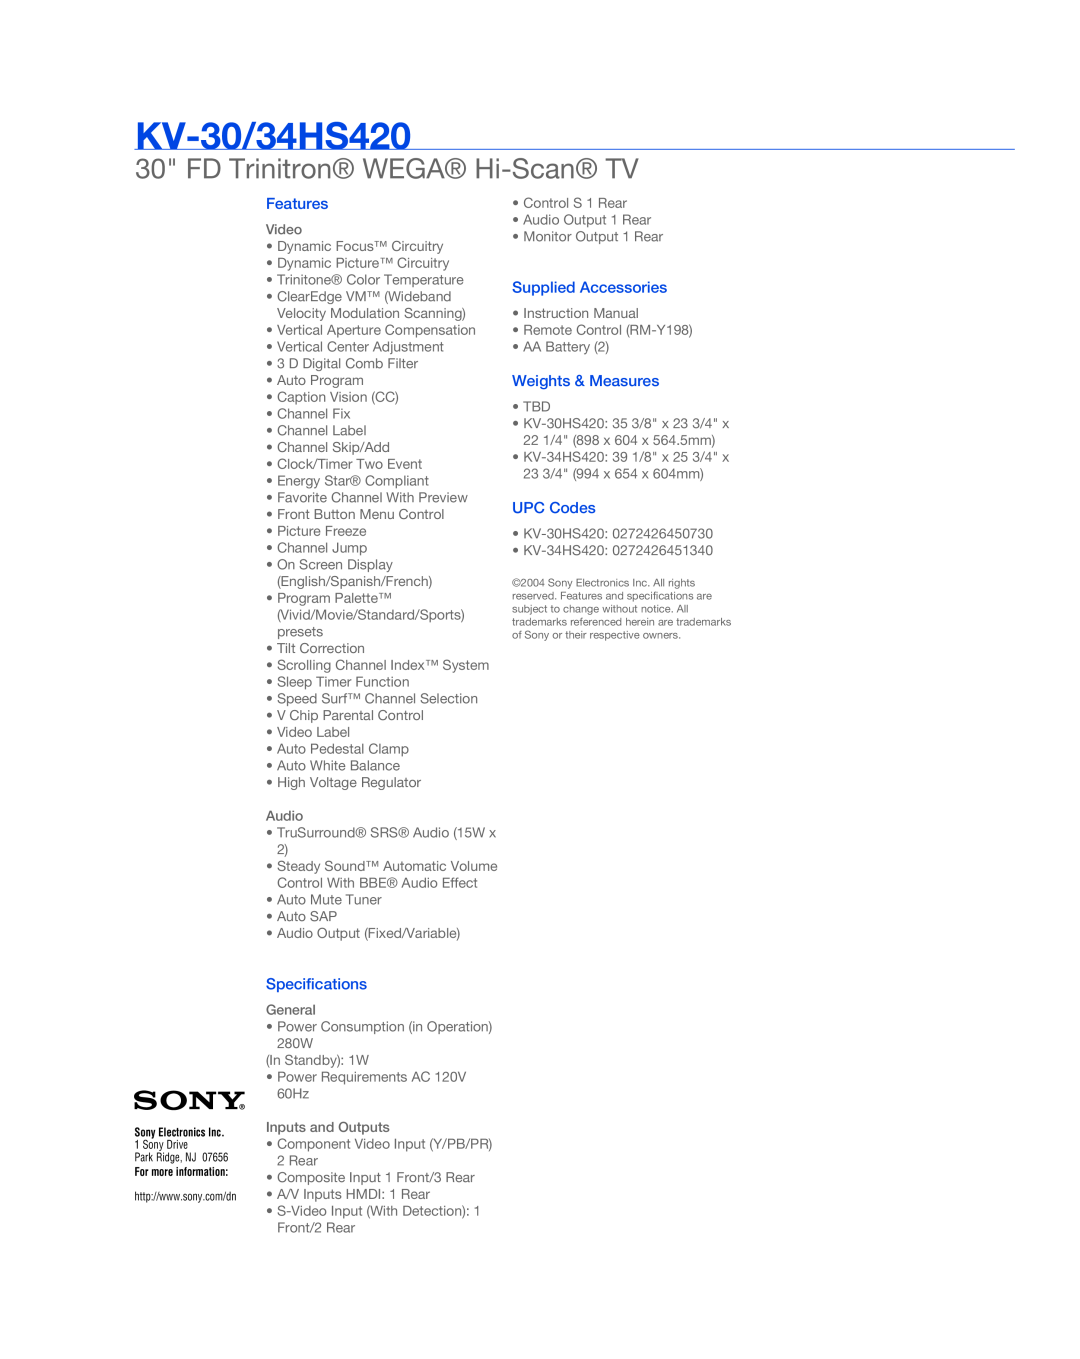 Sony KV-34HS420 KV-30/34HS420, FD Trinitron WEGA Hi-Scan TV, Features, Specifications, Supplied Accessories, UPC Codes 